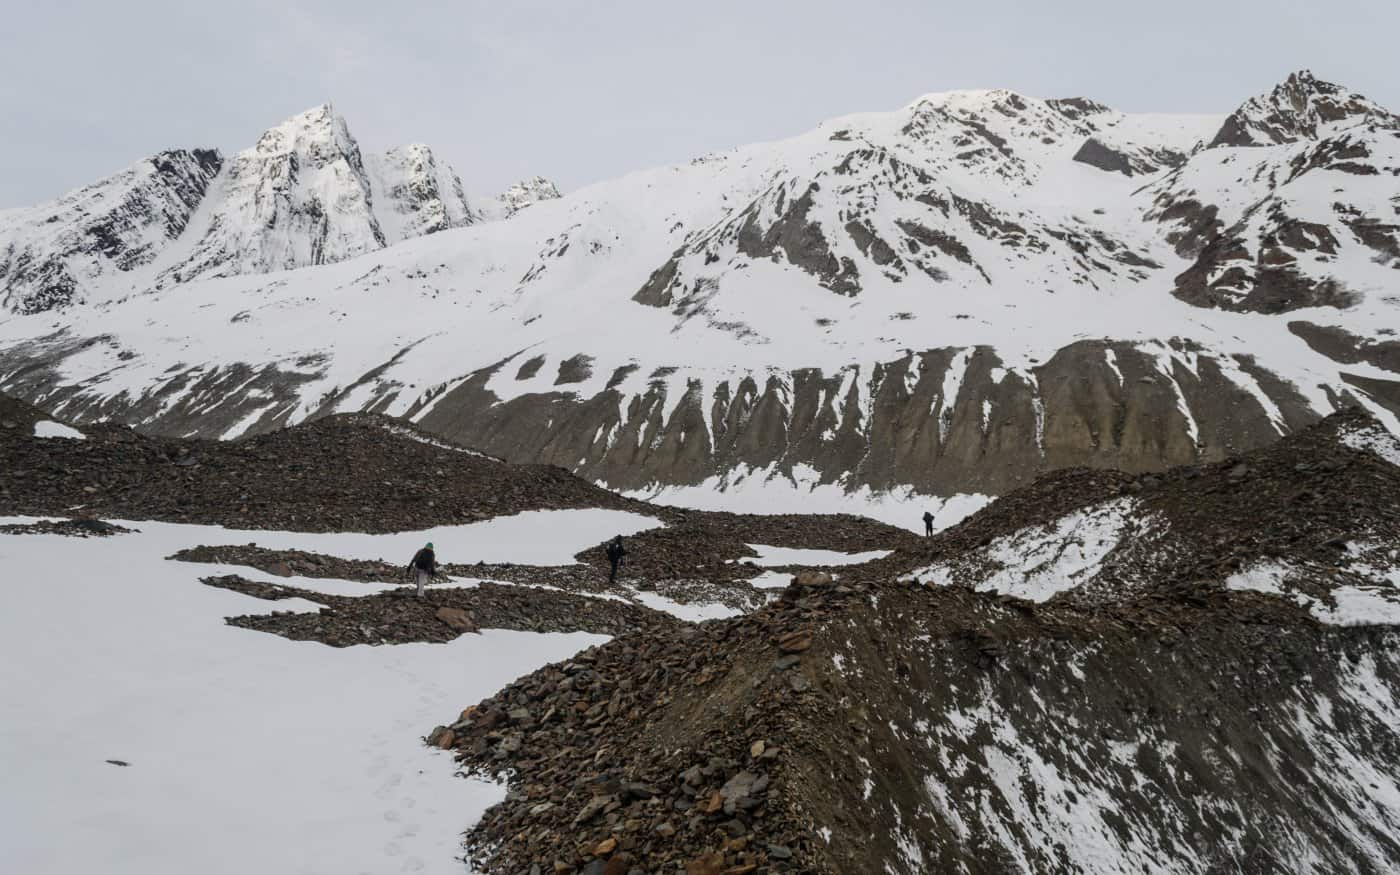 Start of the climb [Lamkhaga pass expedition 2015]